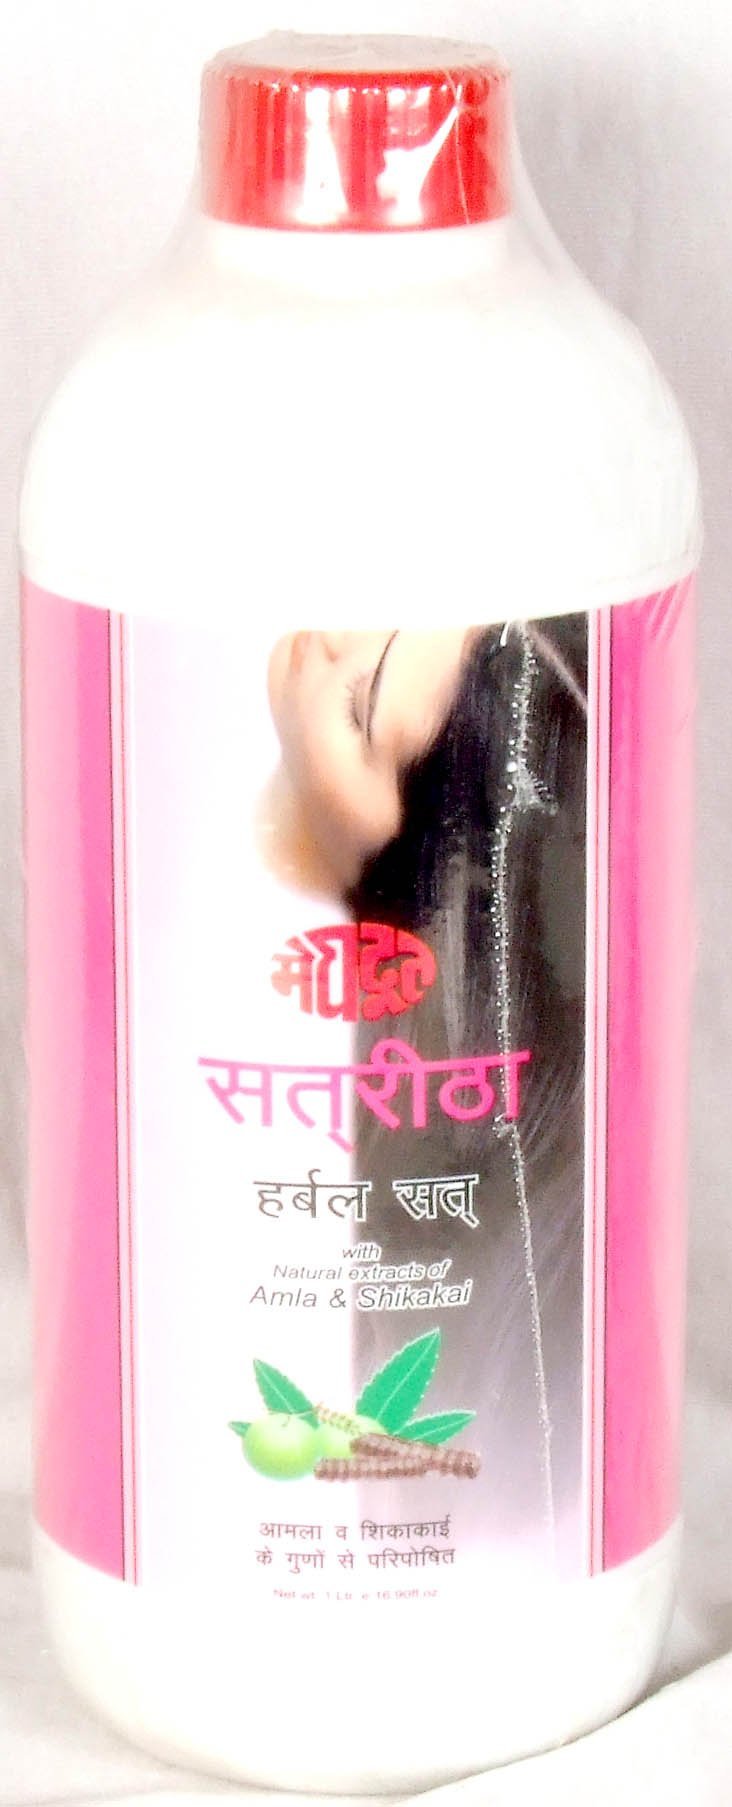 Meghdoot Satritha with Natural Extracts of Amla & Shikakai - book cover